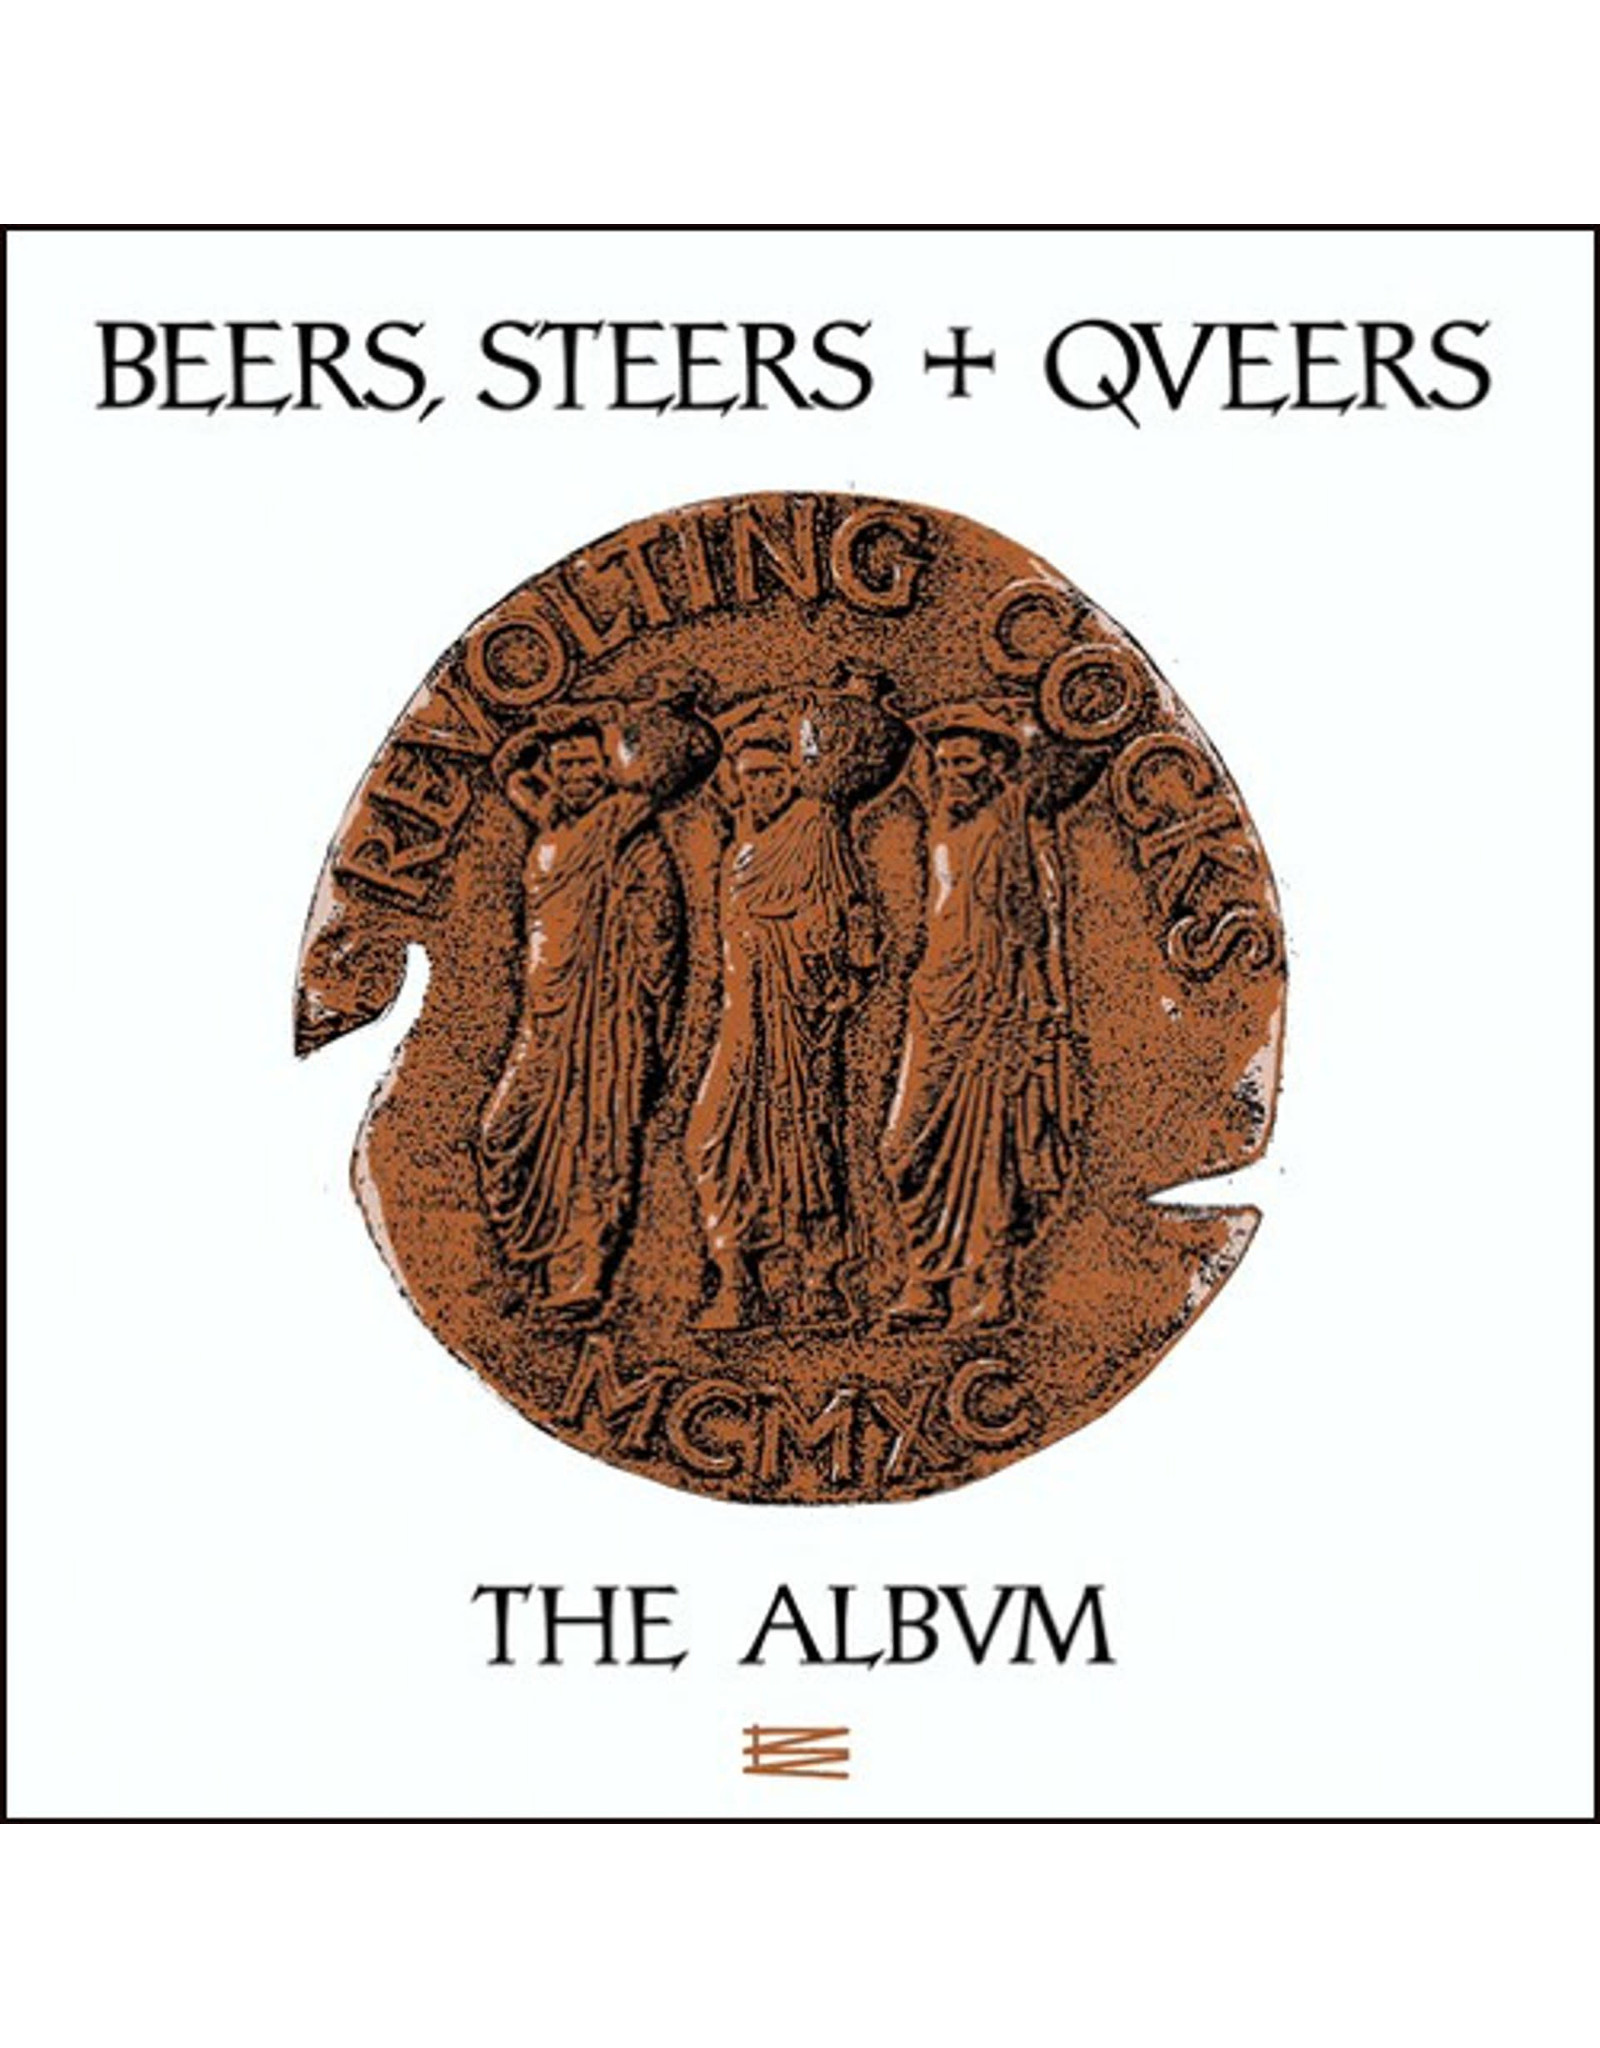 Cleopatra Revolting Cocks: Beers, Steers + Queers (coloured) LP